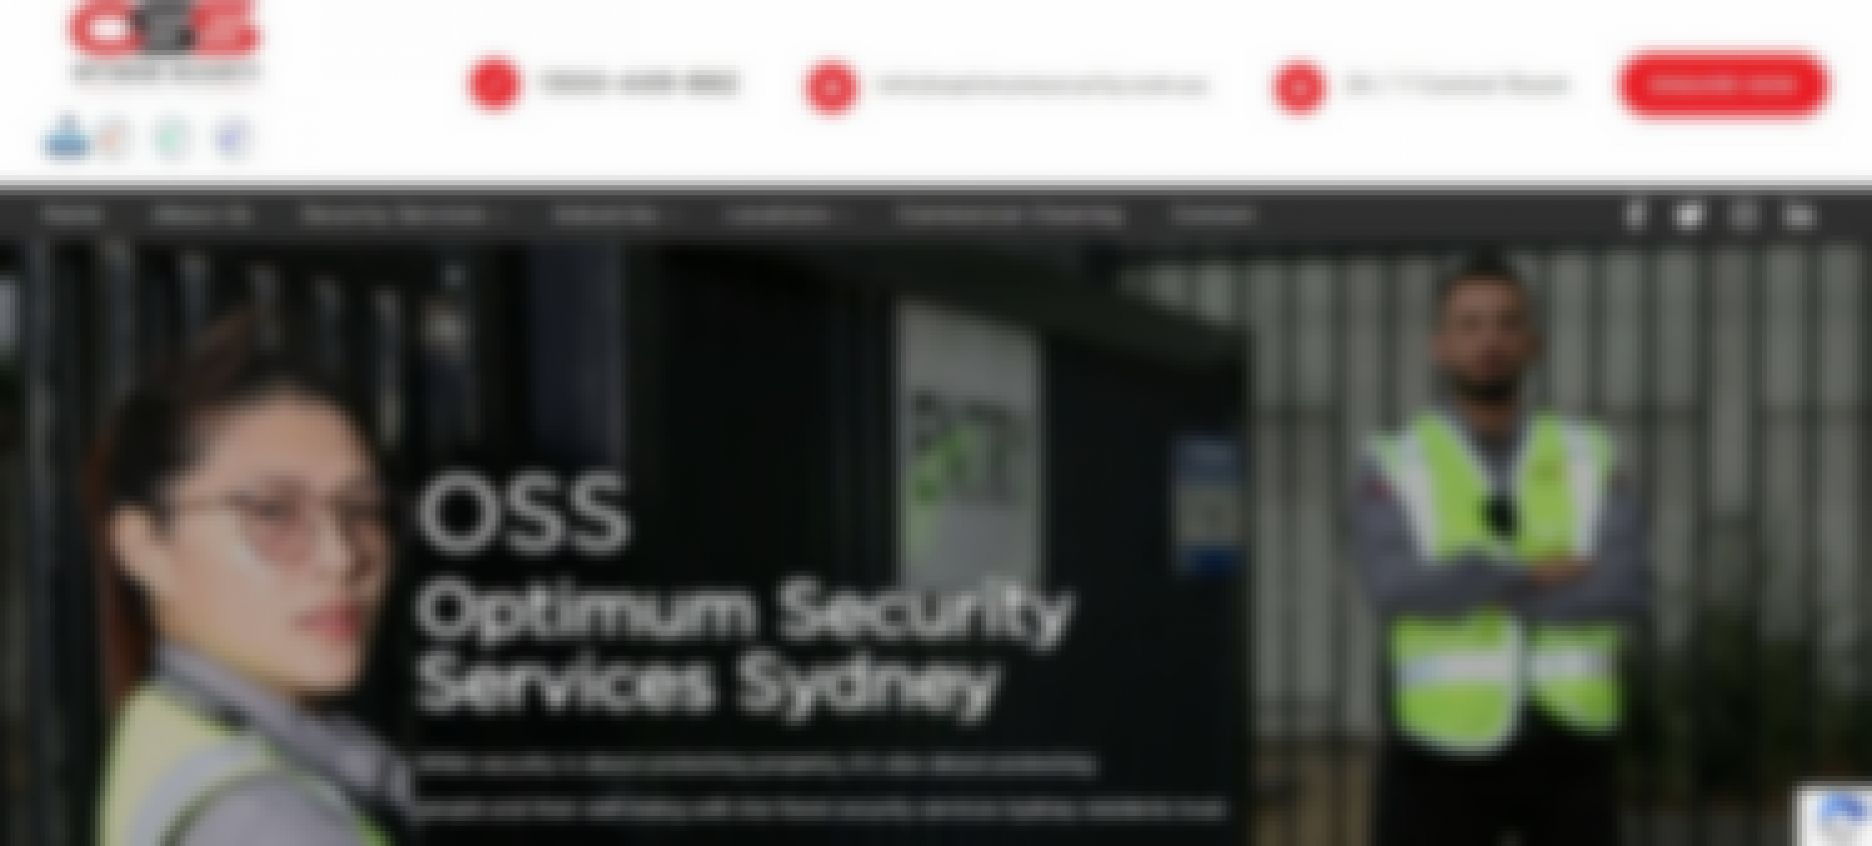 optimum security services security guard company sydney